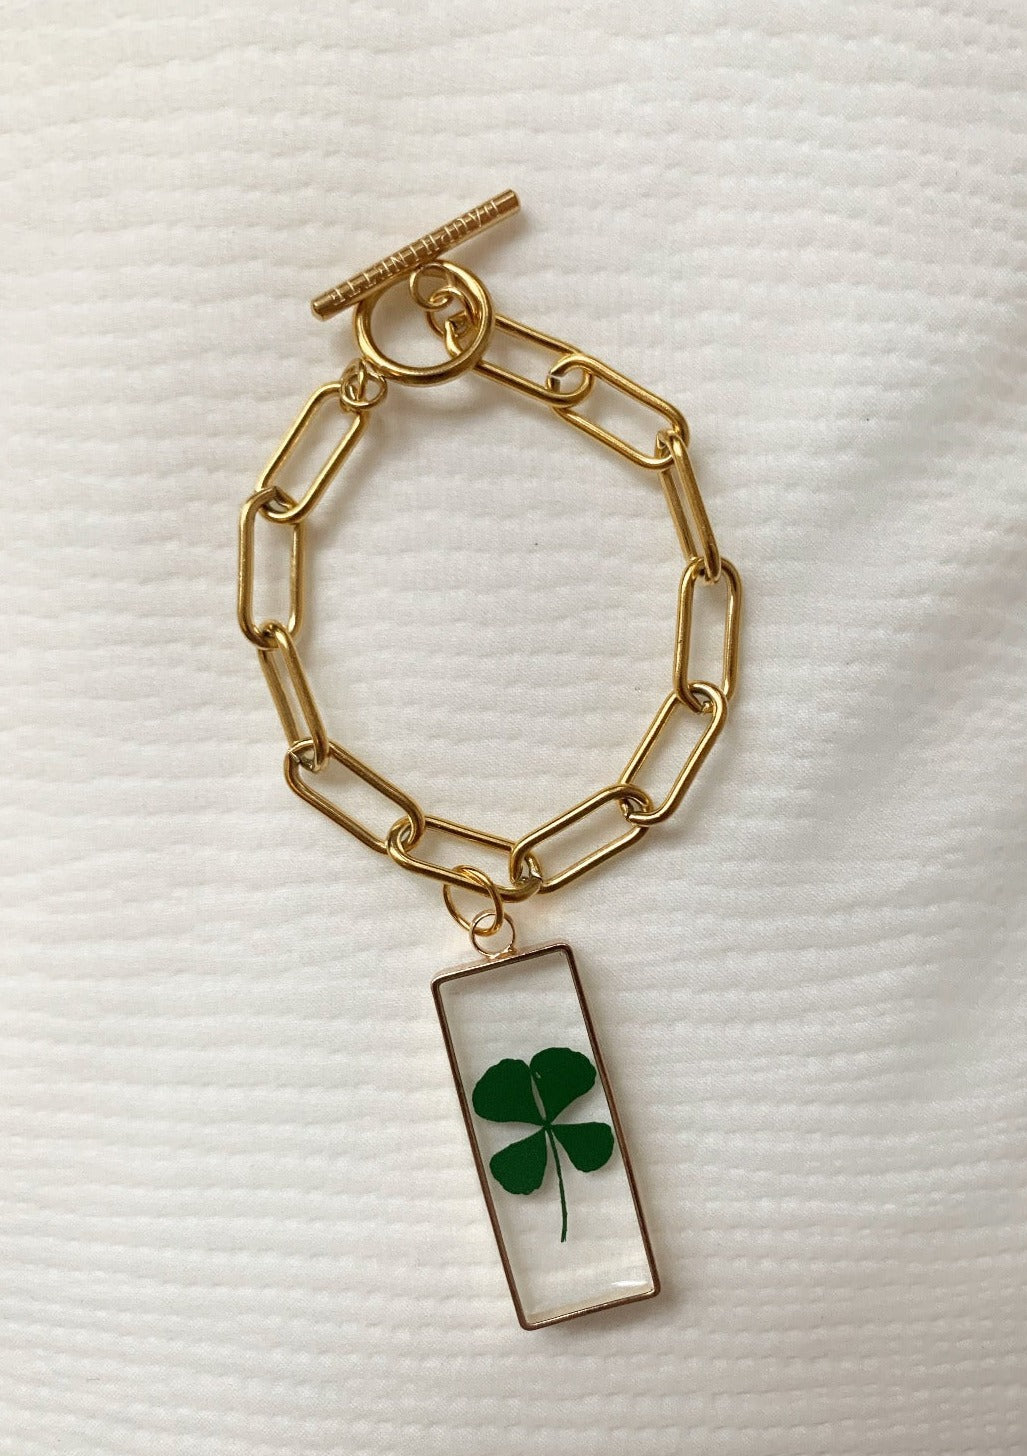 Clover Leaf Bracelet by Exclusive Green / Gold